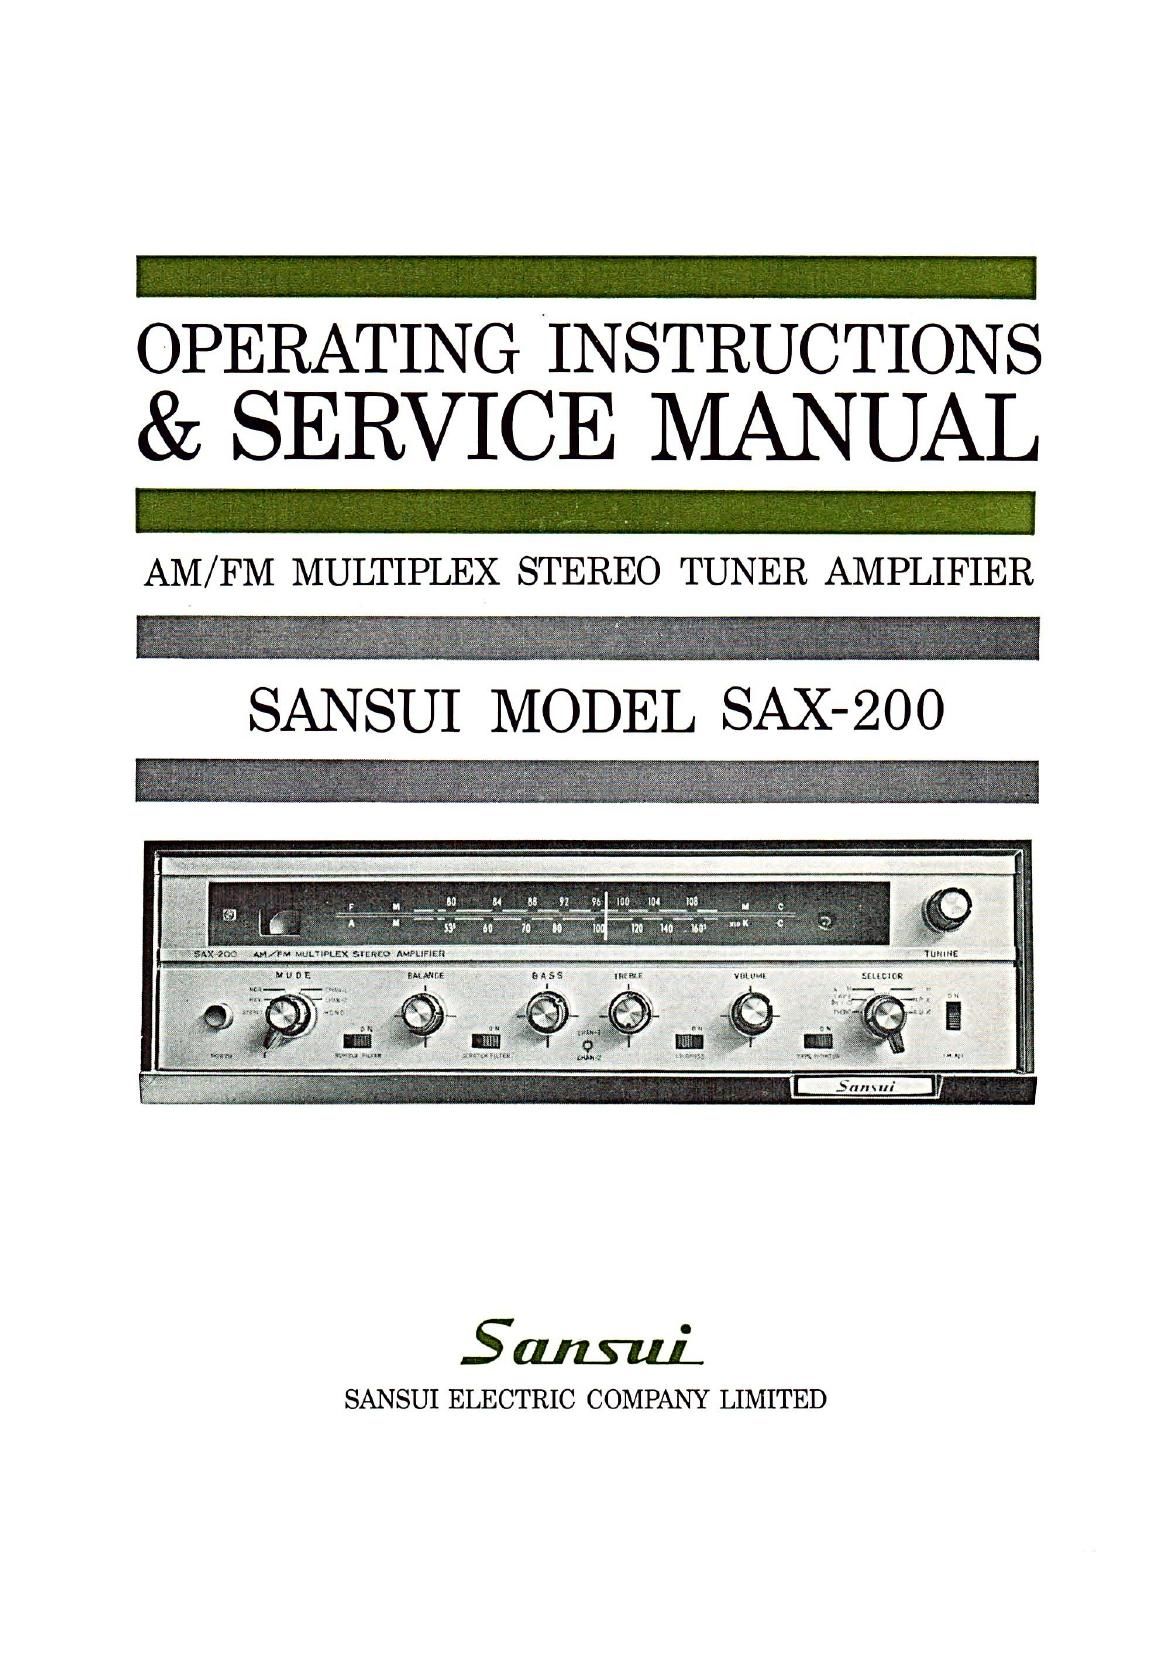 Sansui SAX 200 Service Manual